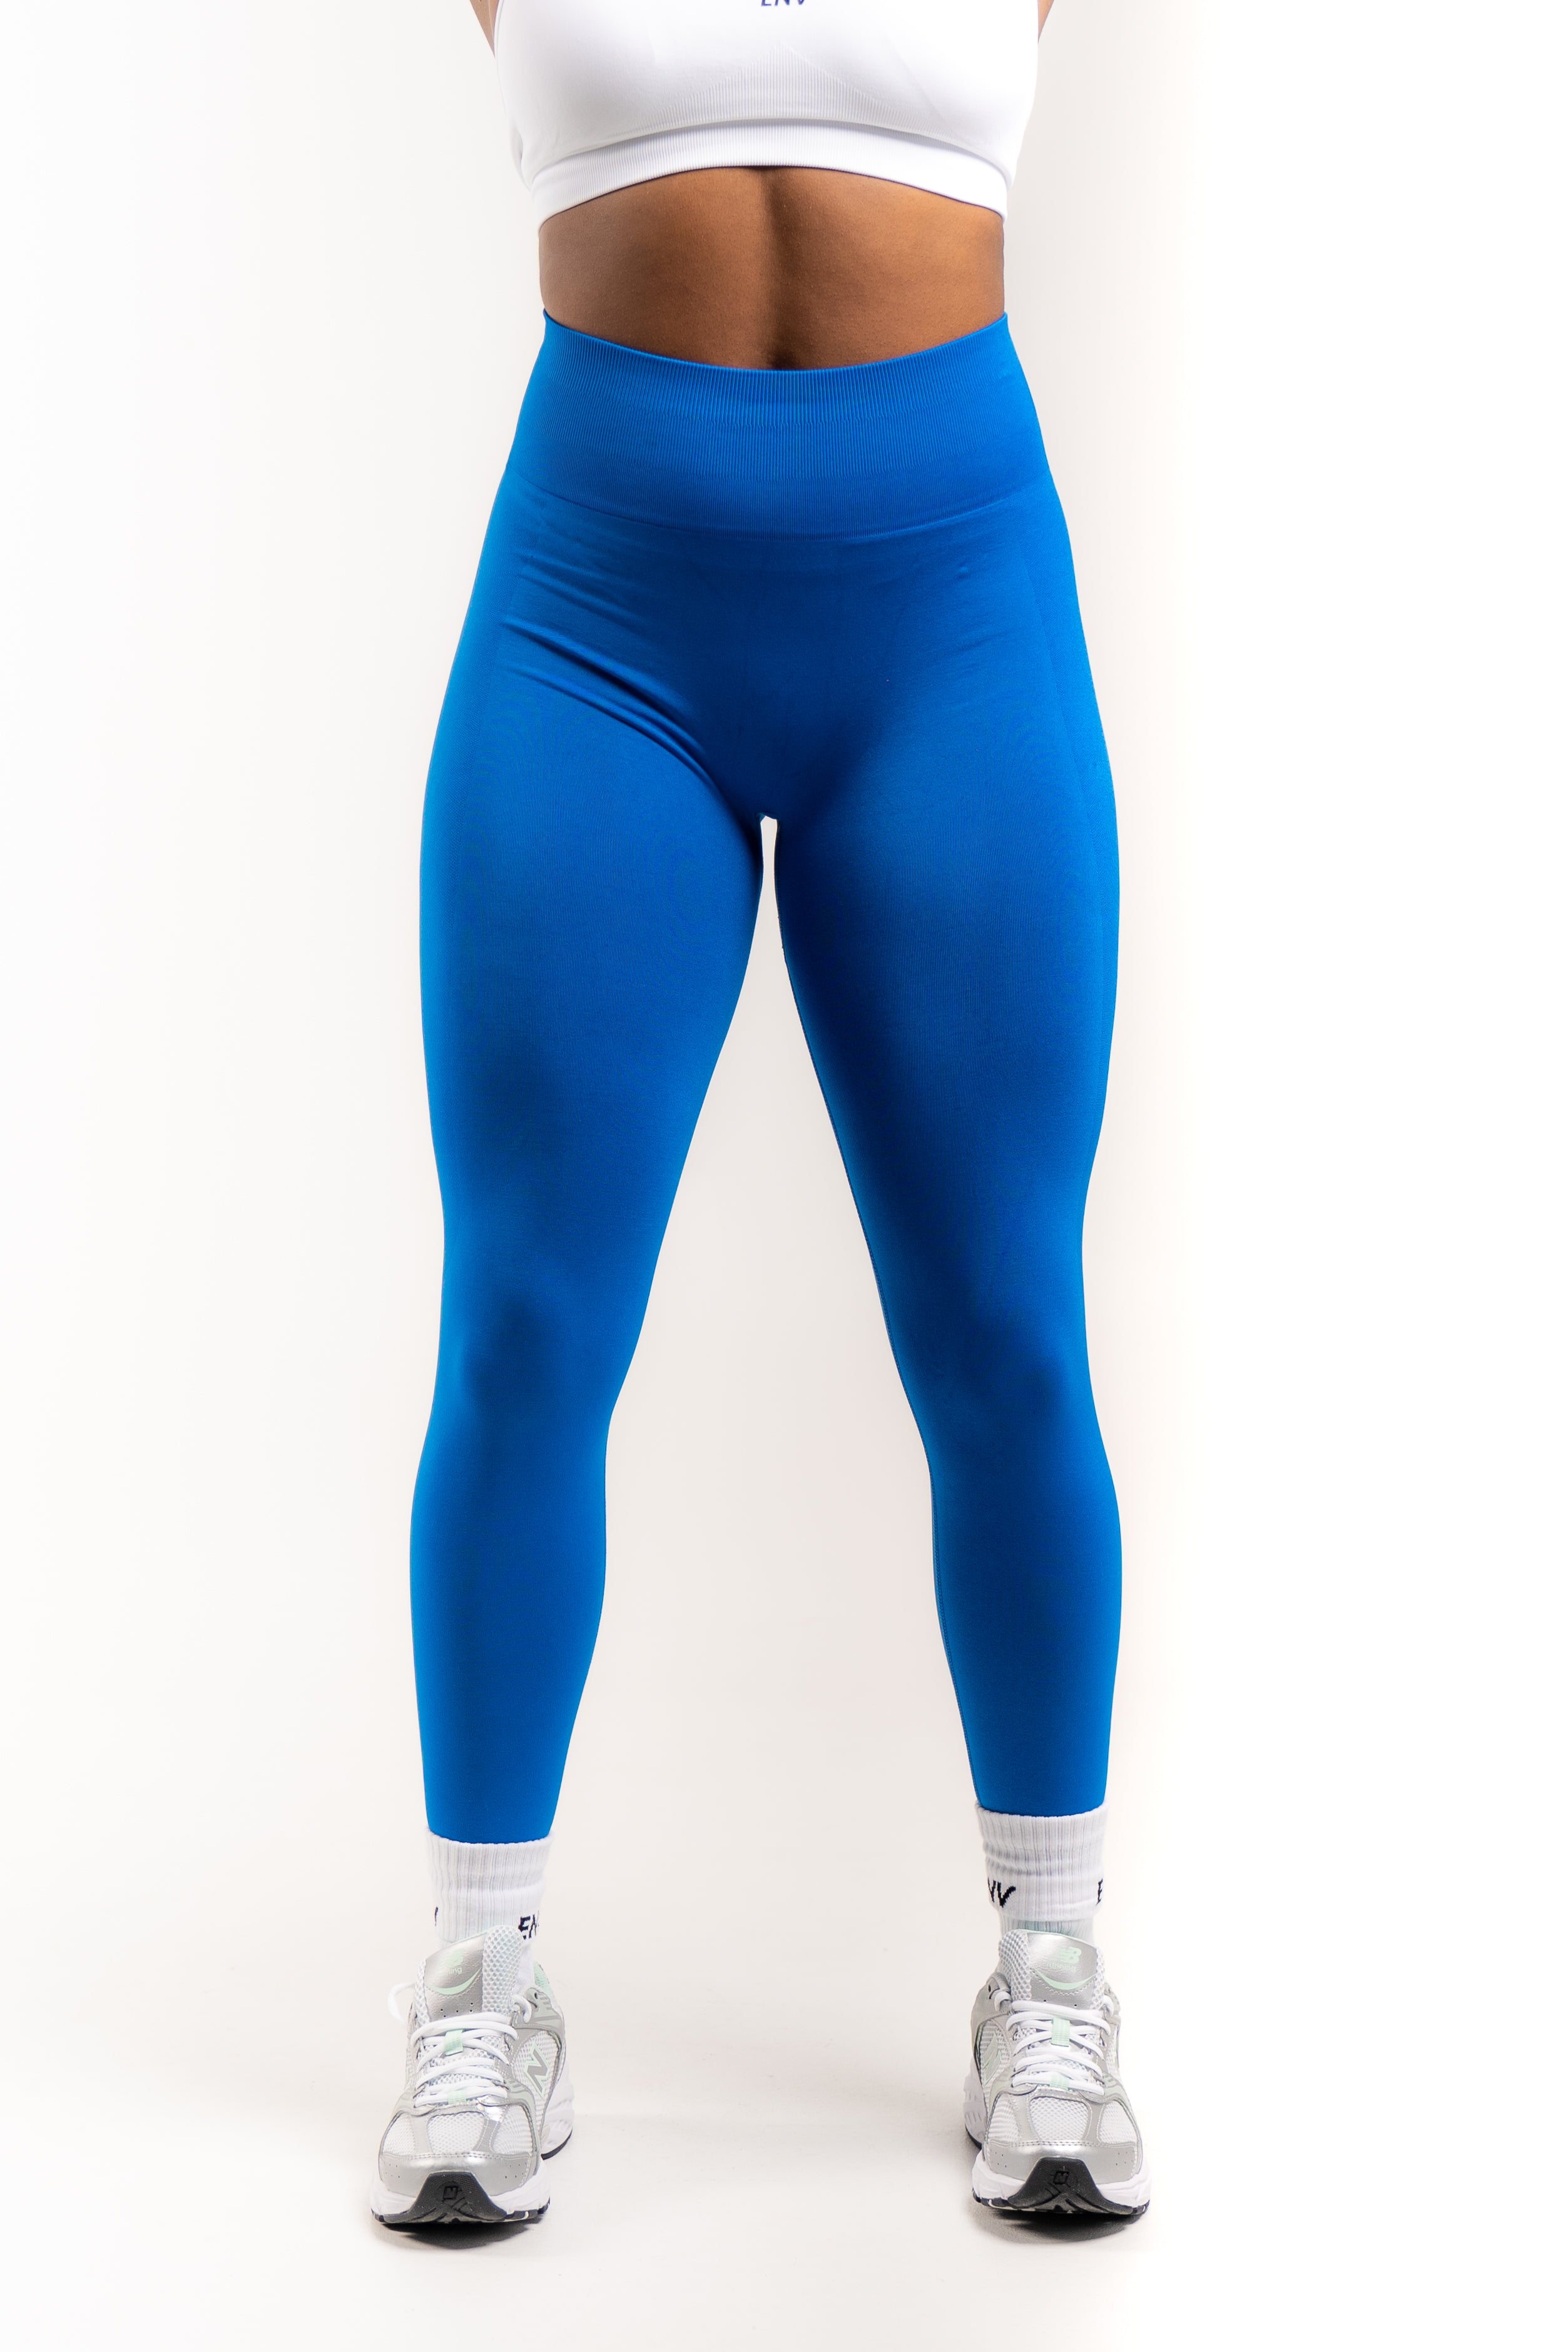 Tory Sport Leggings Placed Lips Graphic Navy Blue Yoga Gym Athletic $168  Medium